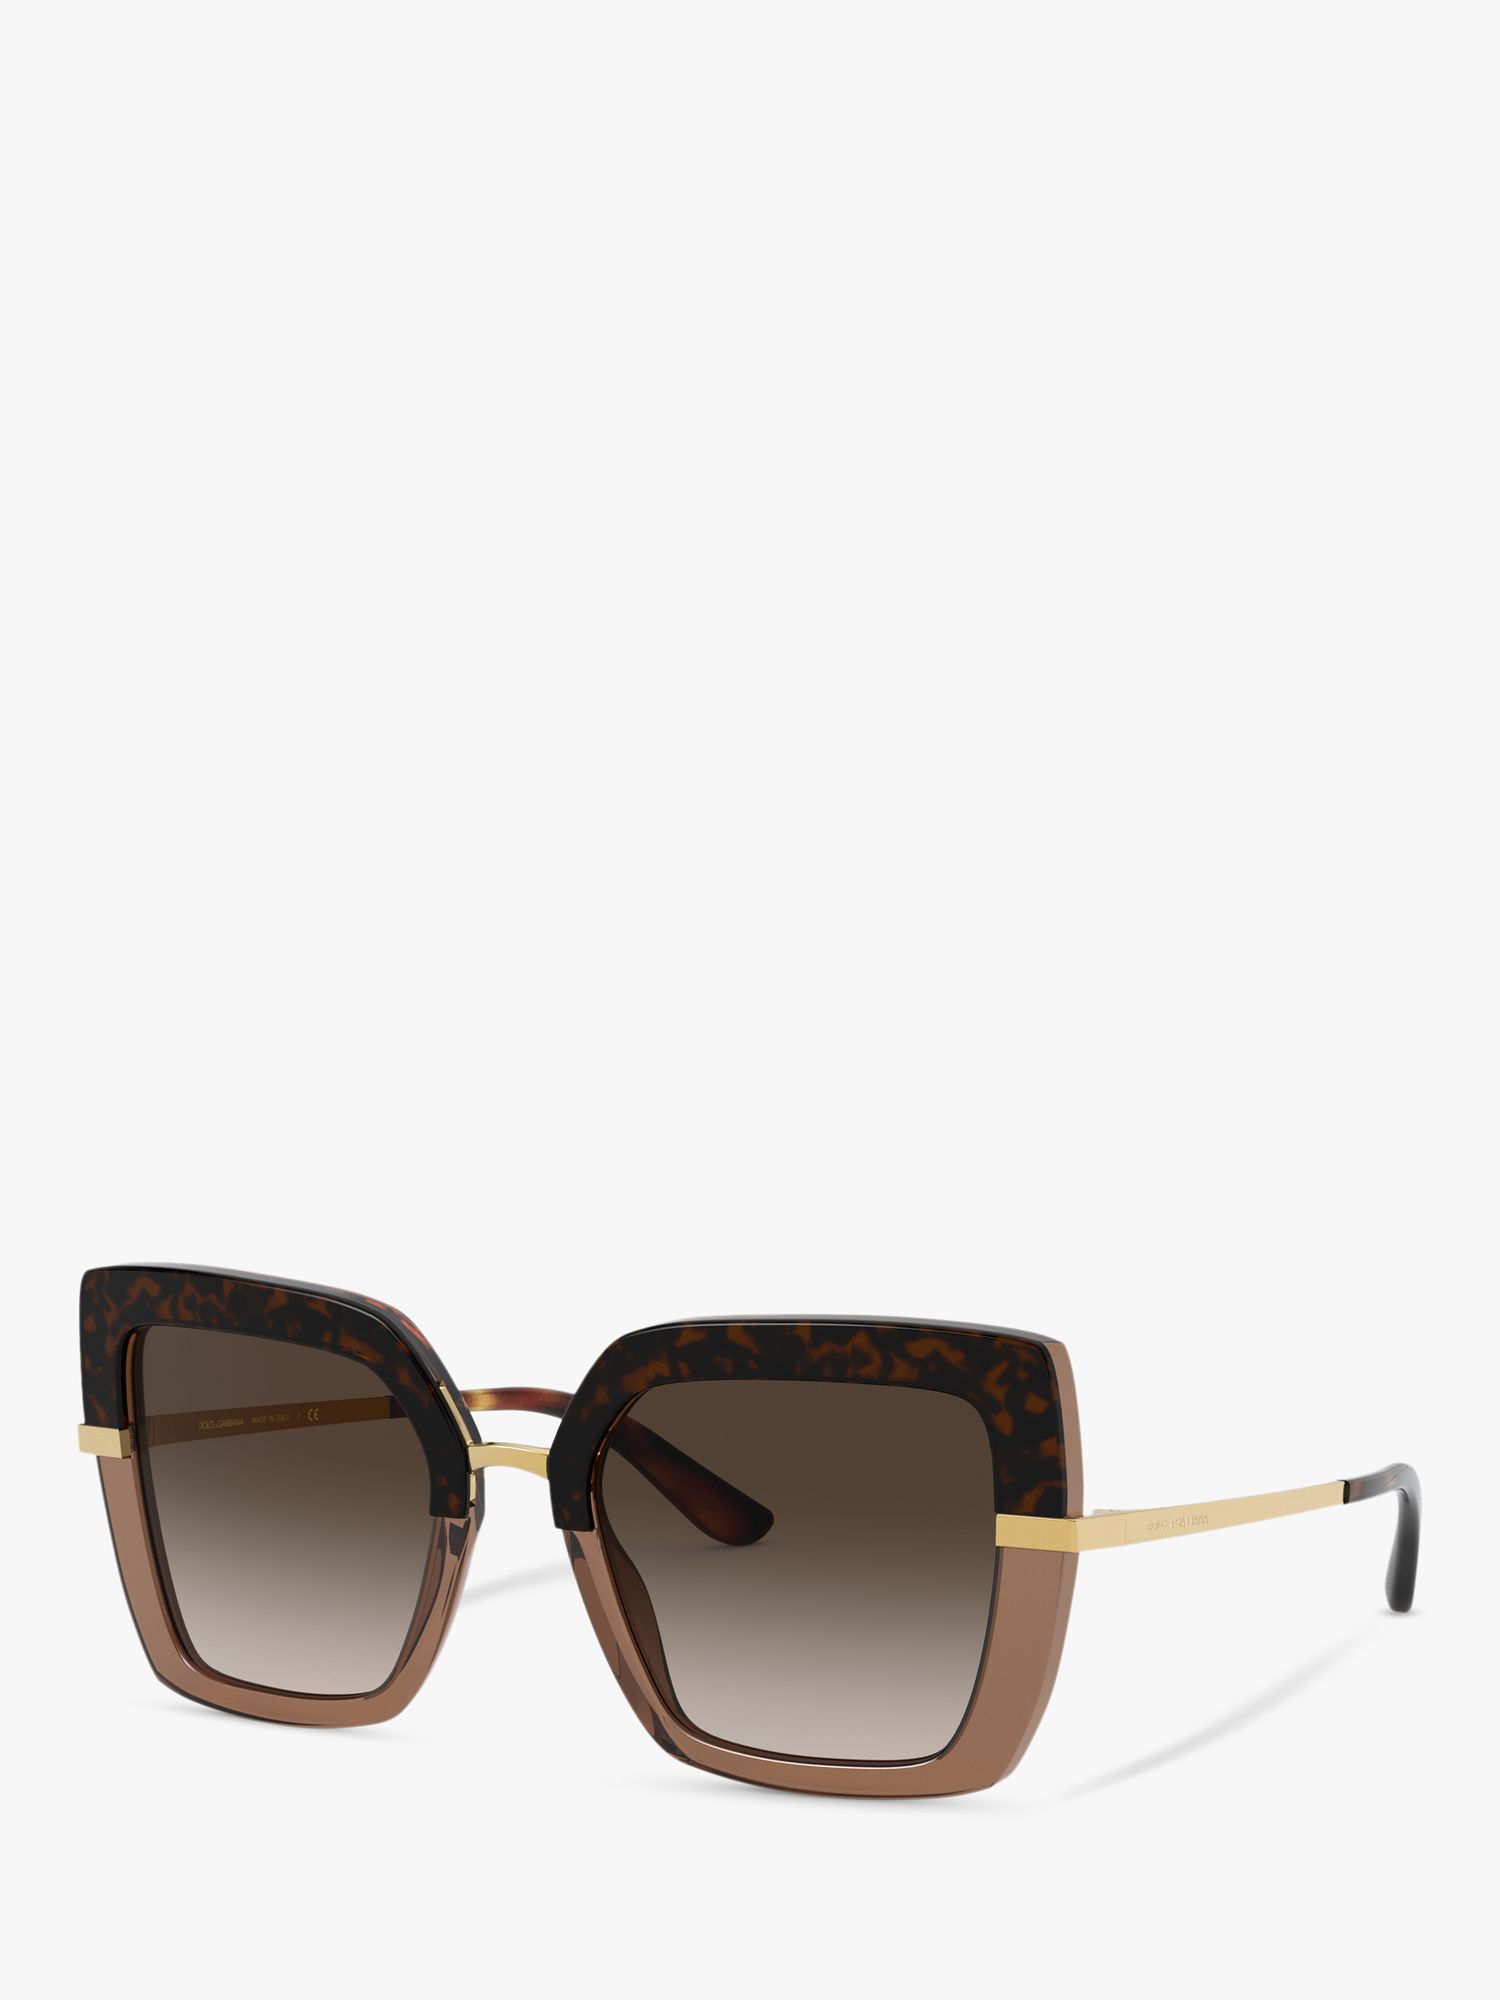 Dolce & Gabbana DG4373 Women's Square Sunglasses, Tortoiseshell/Brown at  John Lewis & Partners